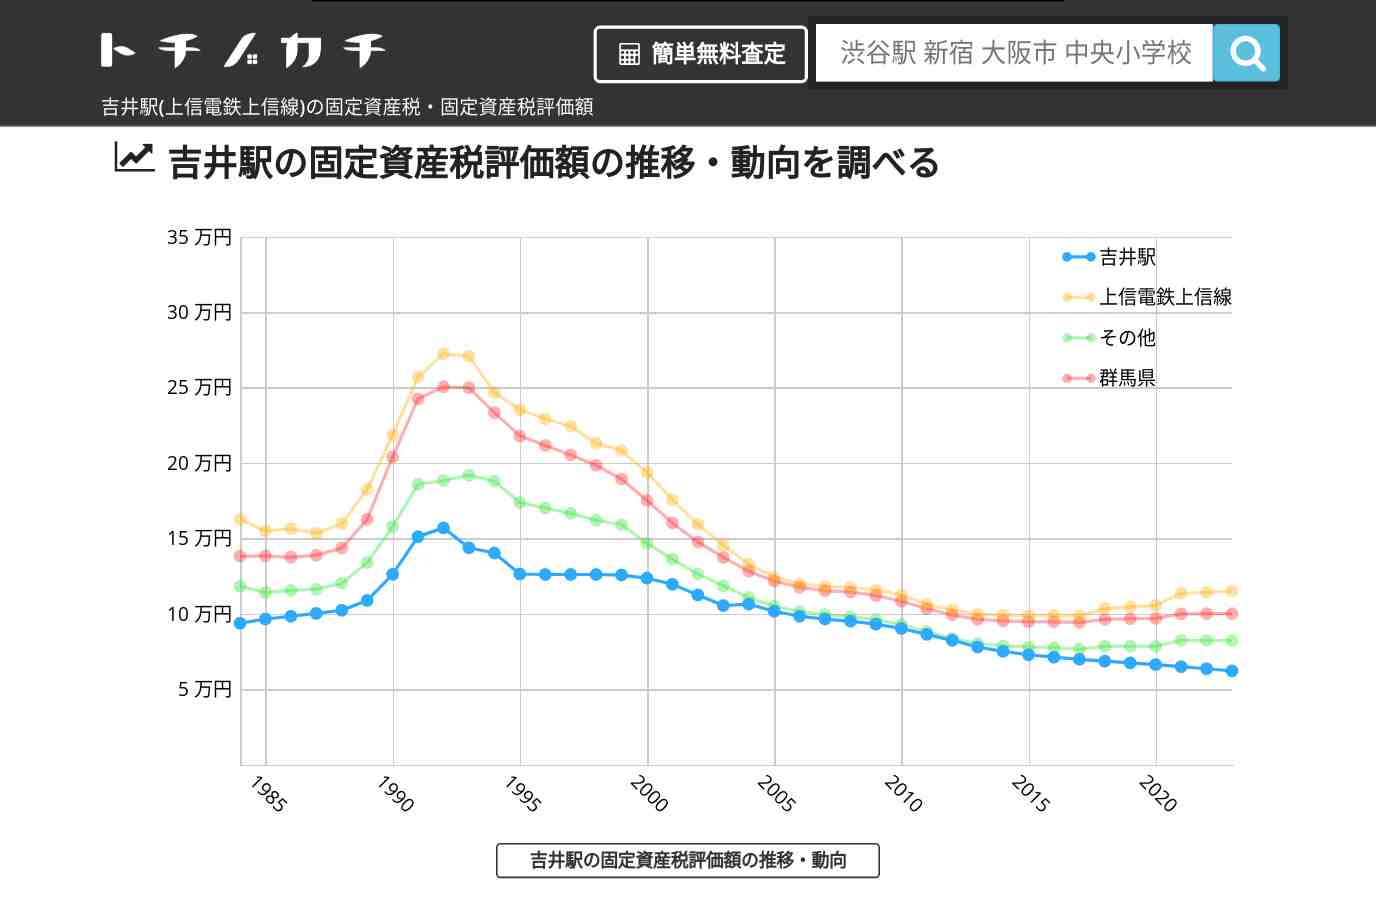 吉井駅(上信電鉄上信線)の固定資産税・固定資産税評価額 | トチノカチ